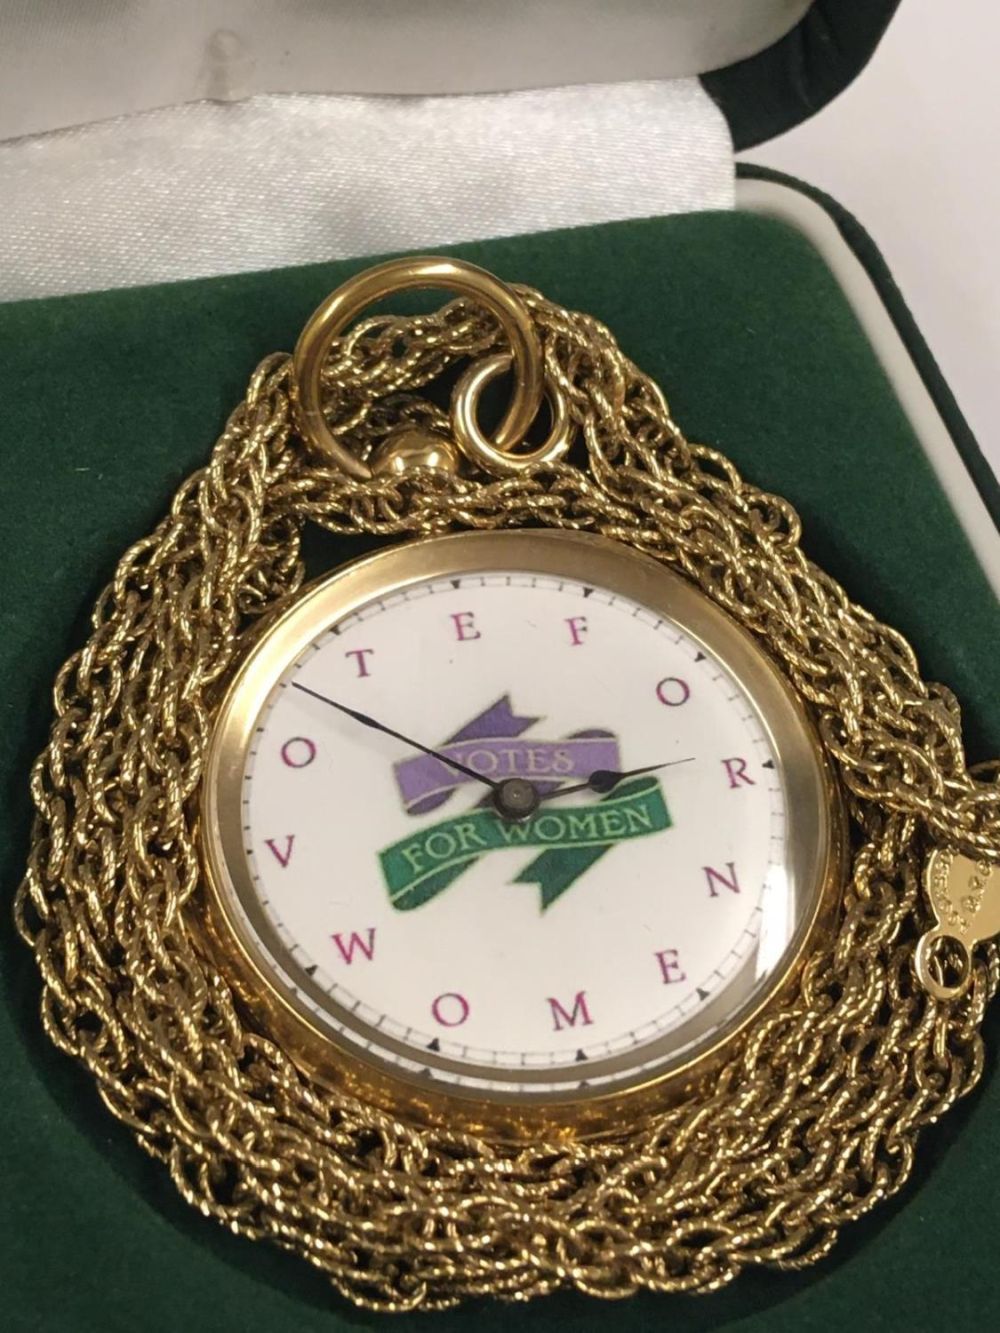 Antique Gilt Silver Suffragette Pocket Watch with box and chain unusual hallmark, case 41mm diameter